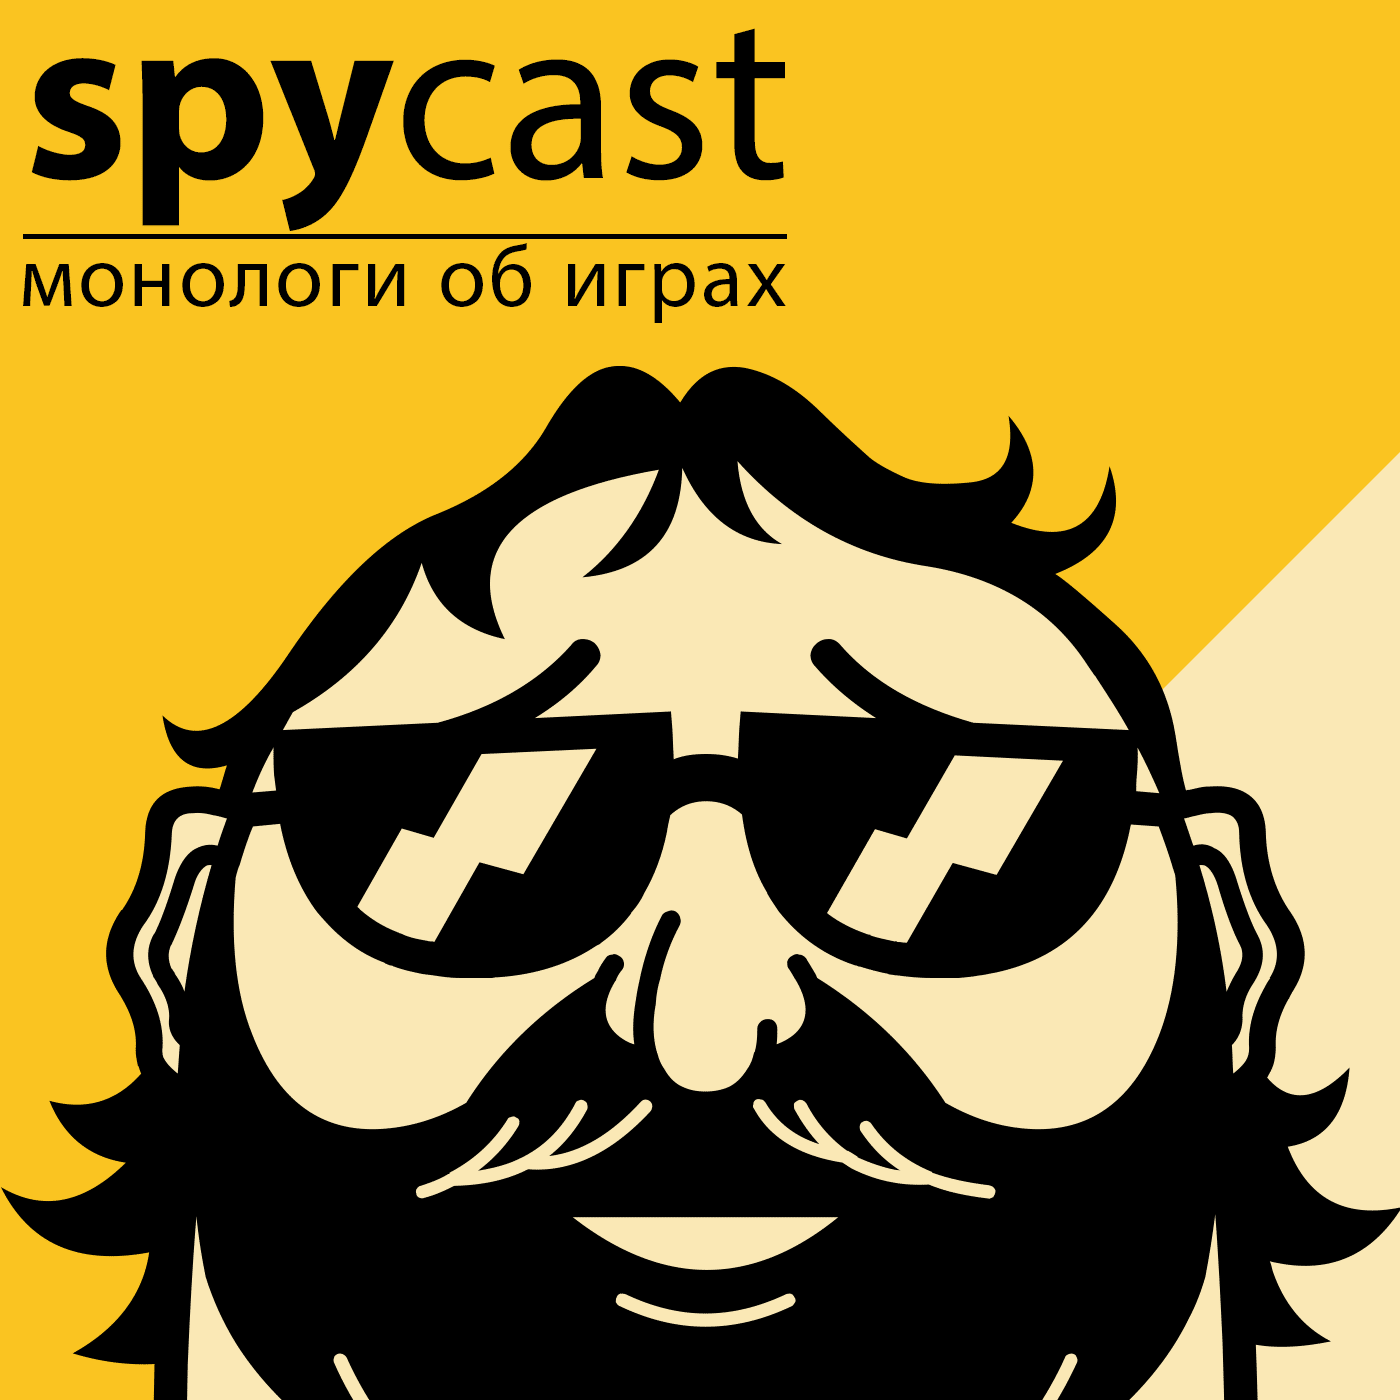 Spycast - монологи об играх